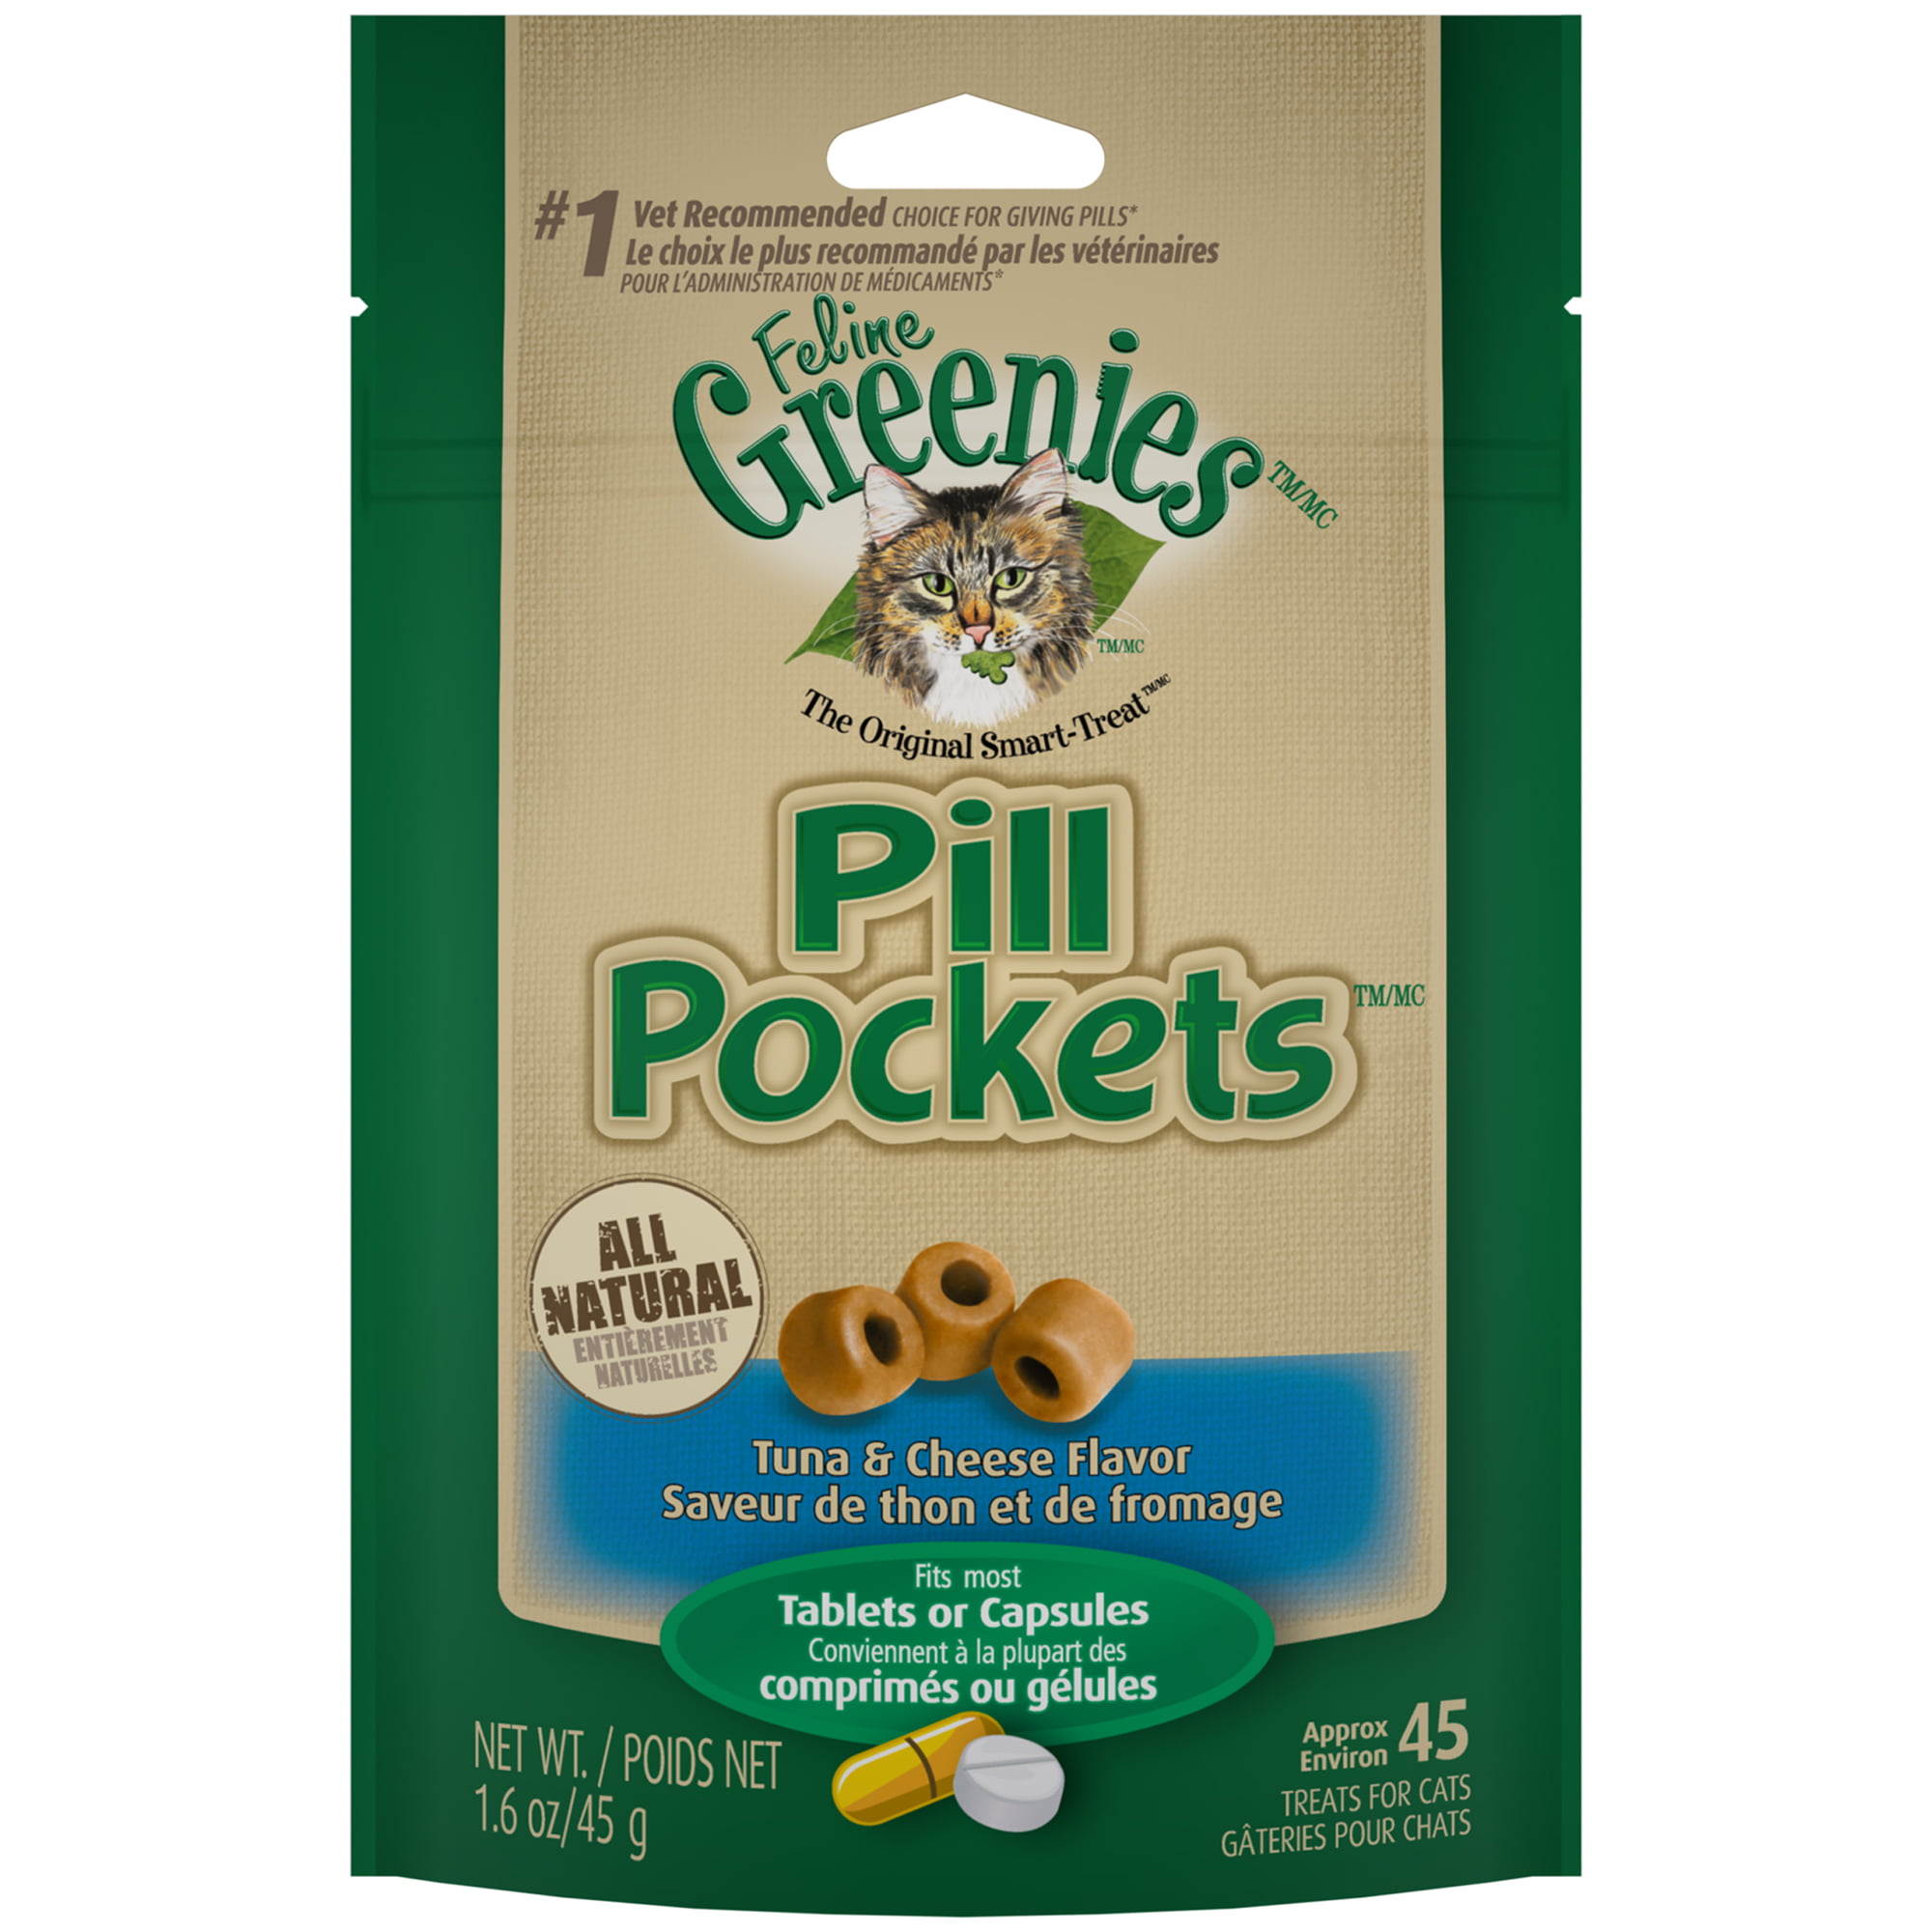 Greenies Feline Pill Pockets for Cats, Tuna & Cheese Flavor, 1.6 oz